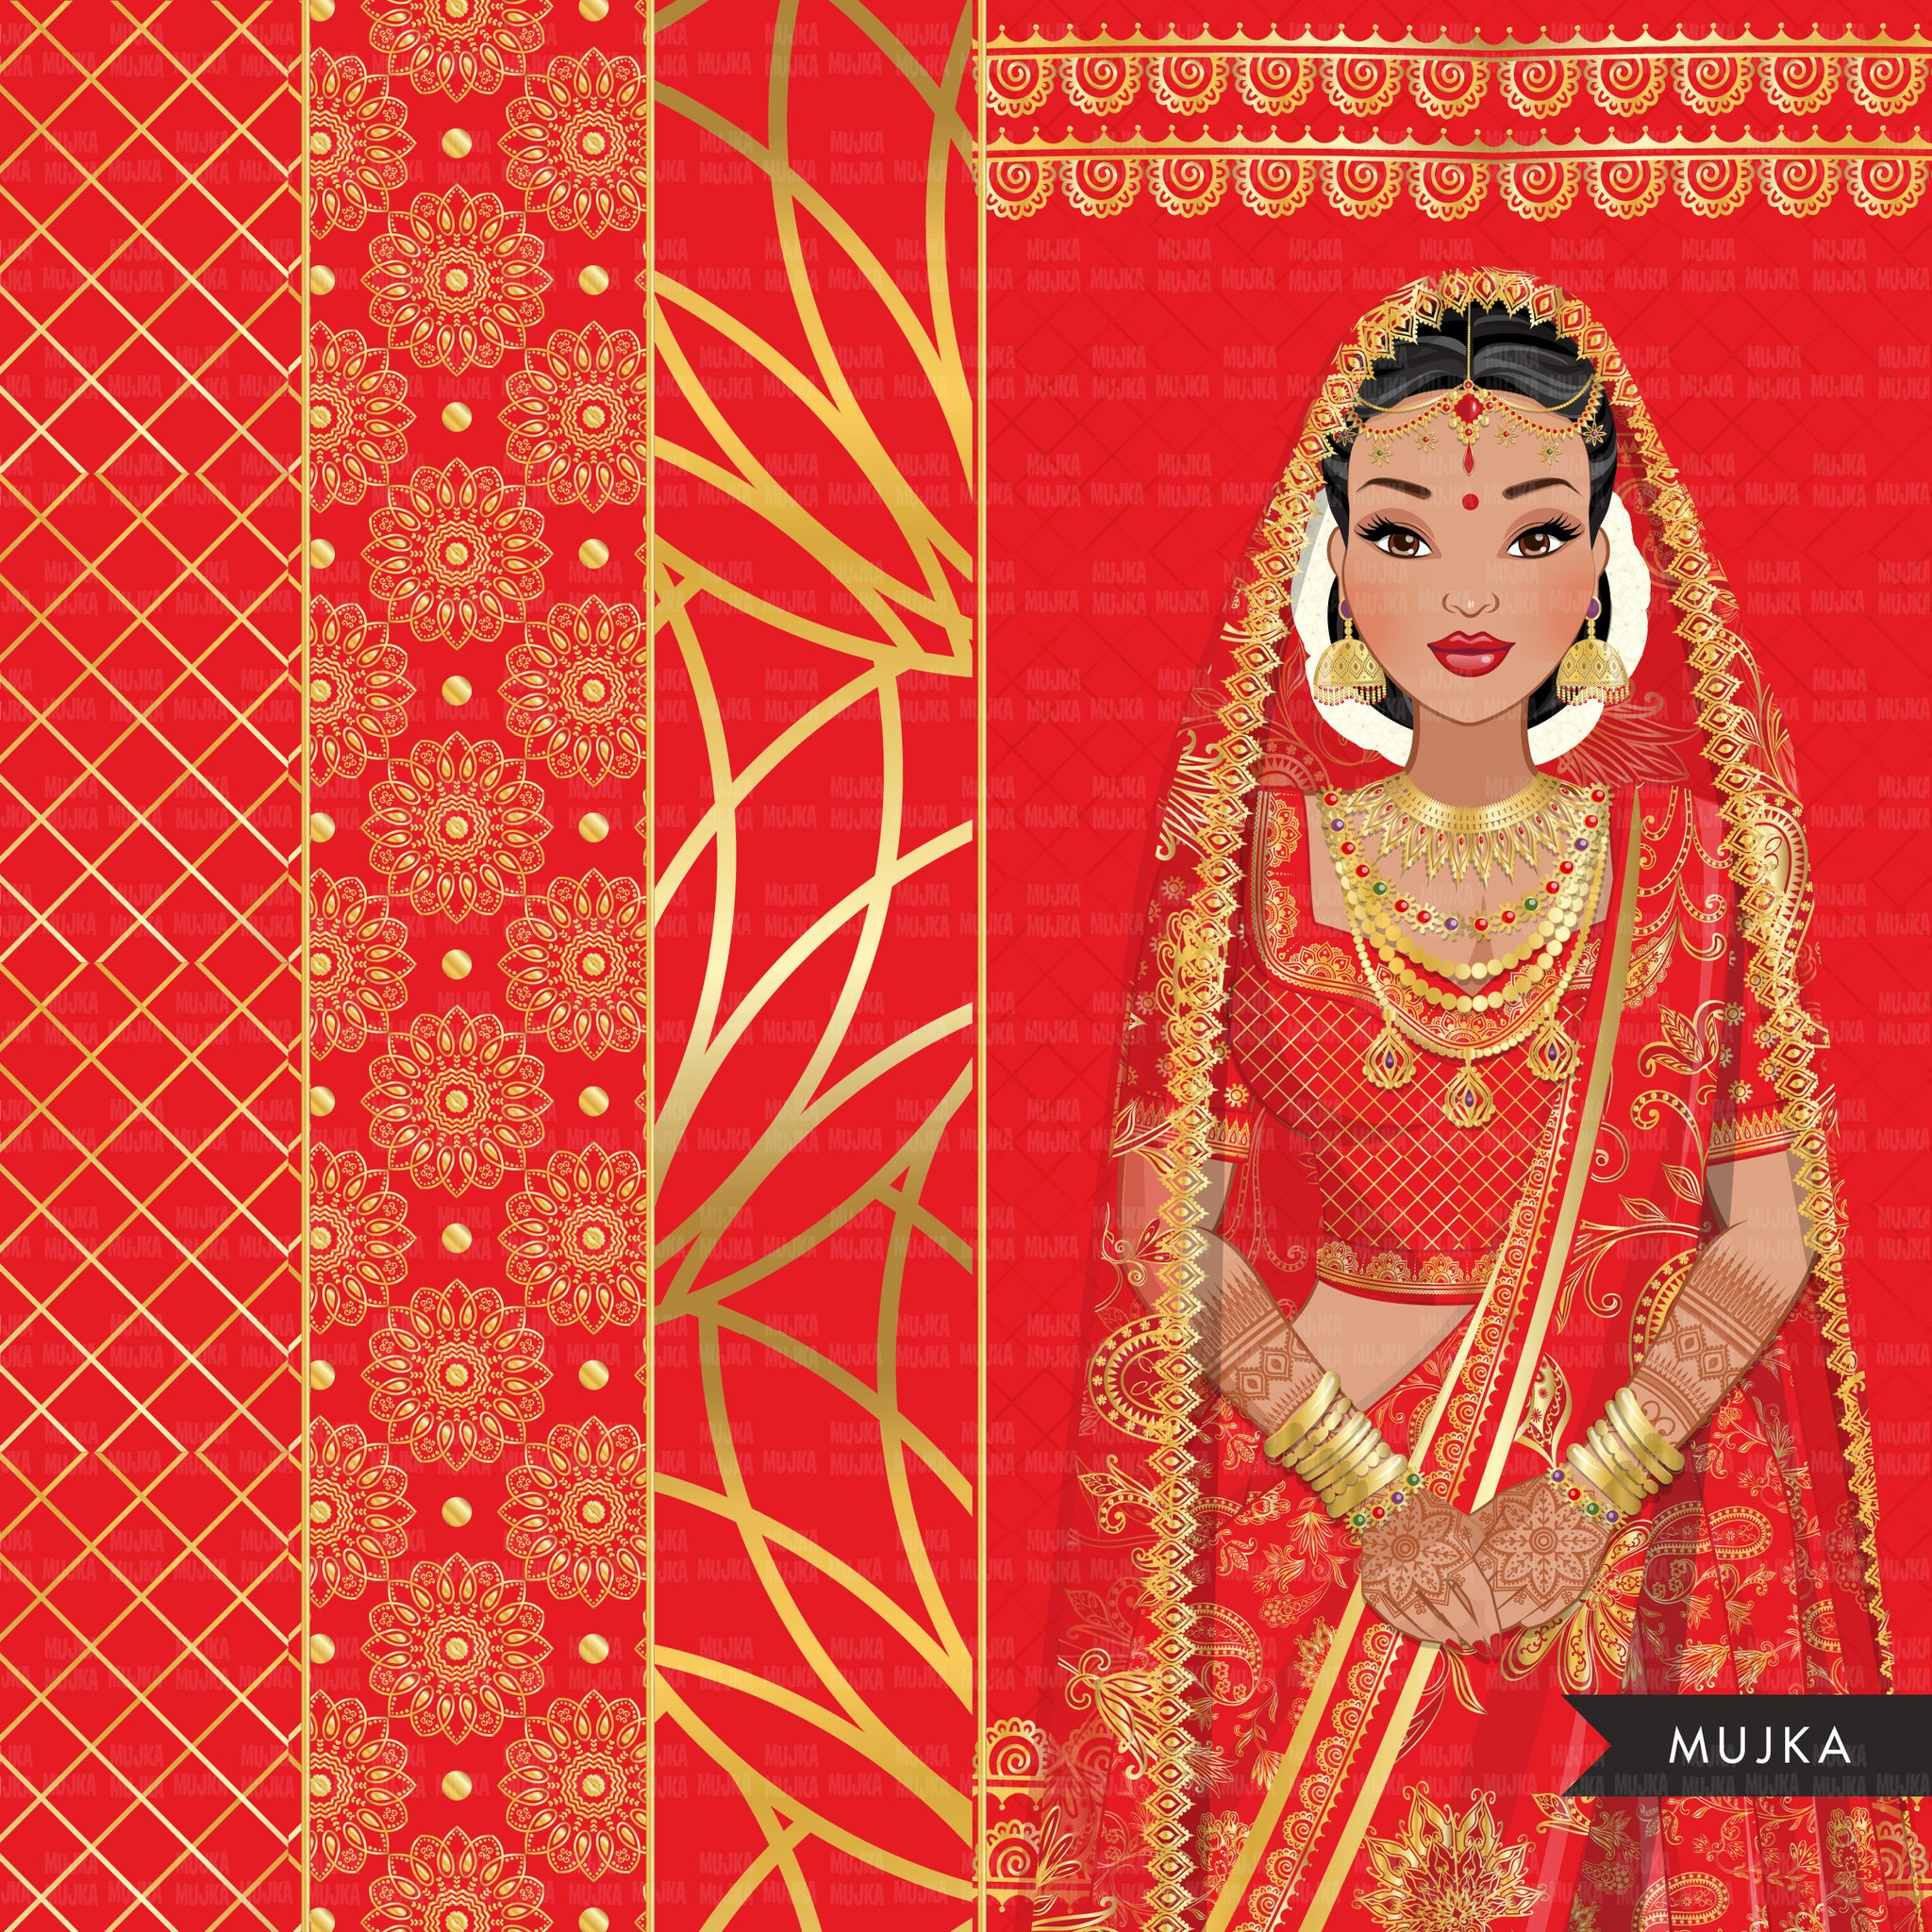 Indian bride clipart, Indian wedding dress, Indian wedding red background, Muslim bride designs, Sublimation designs digital download PNG